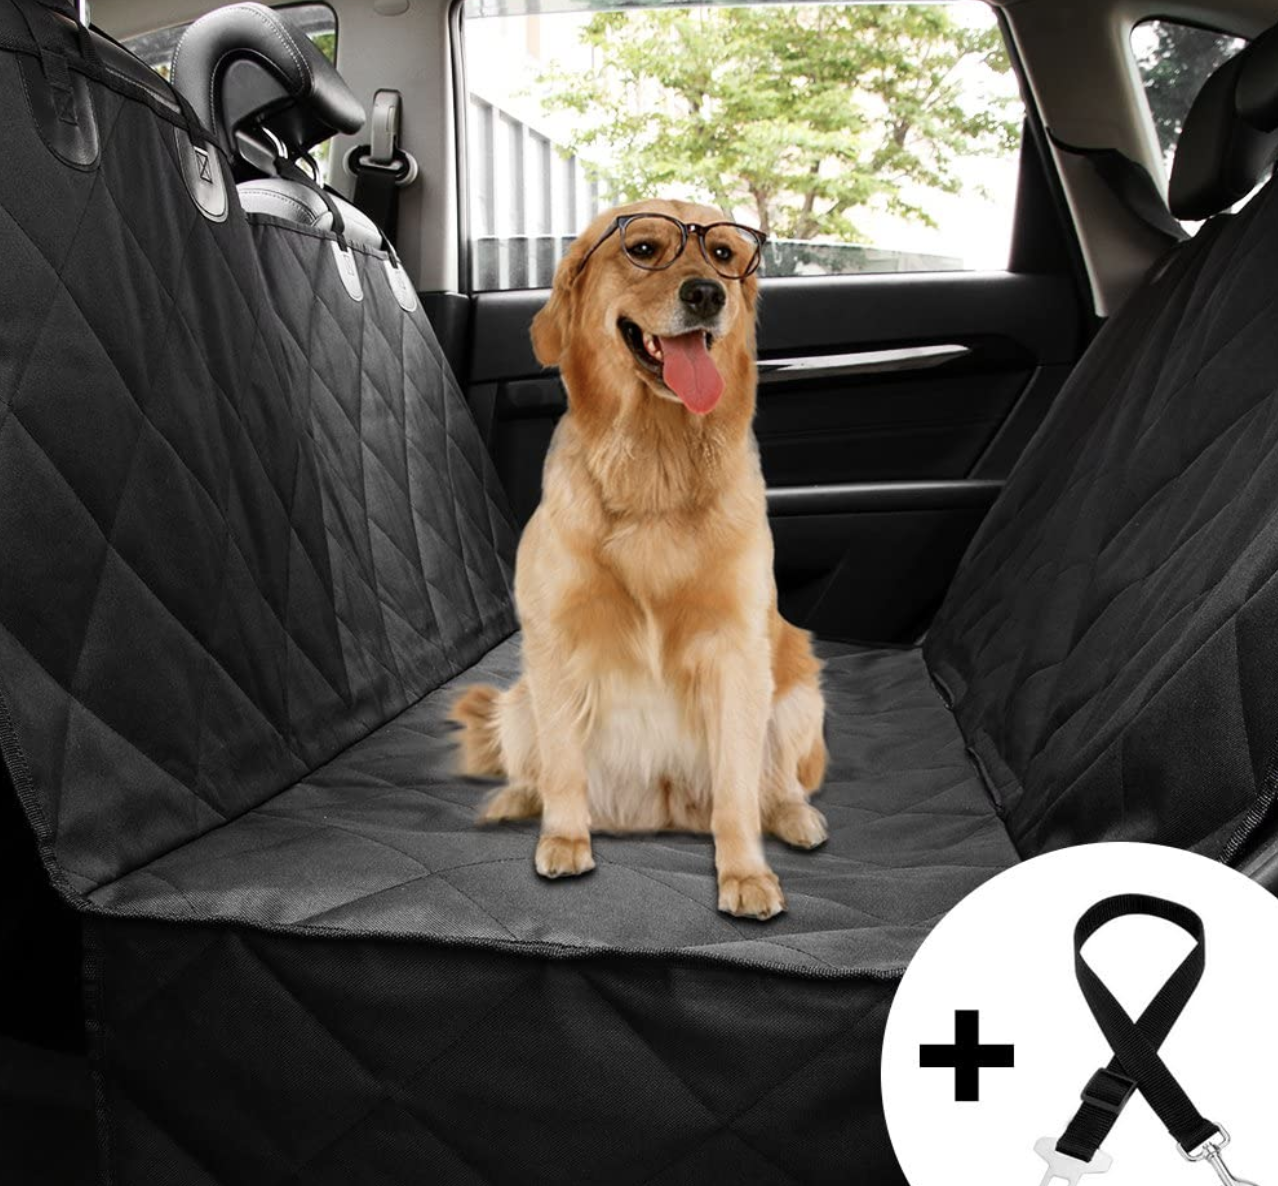 Pet Backseat Cover